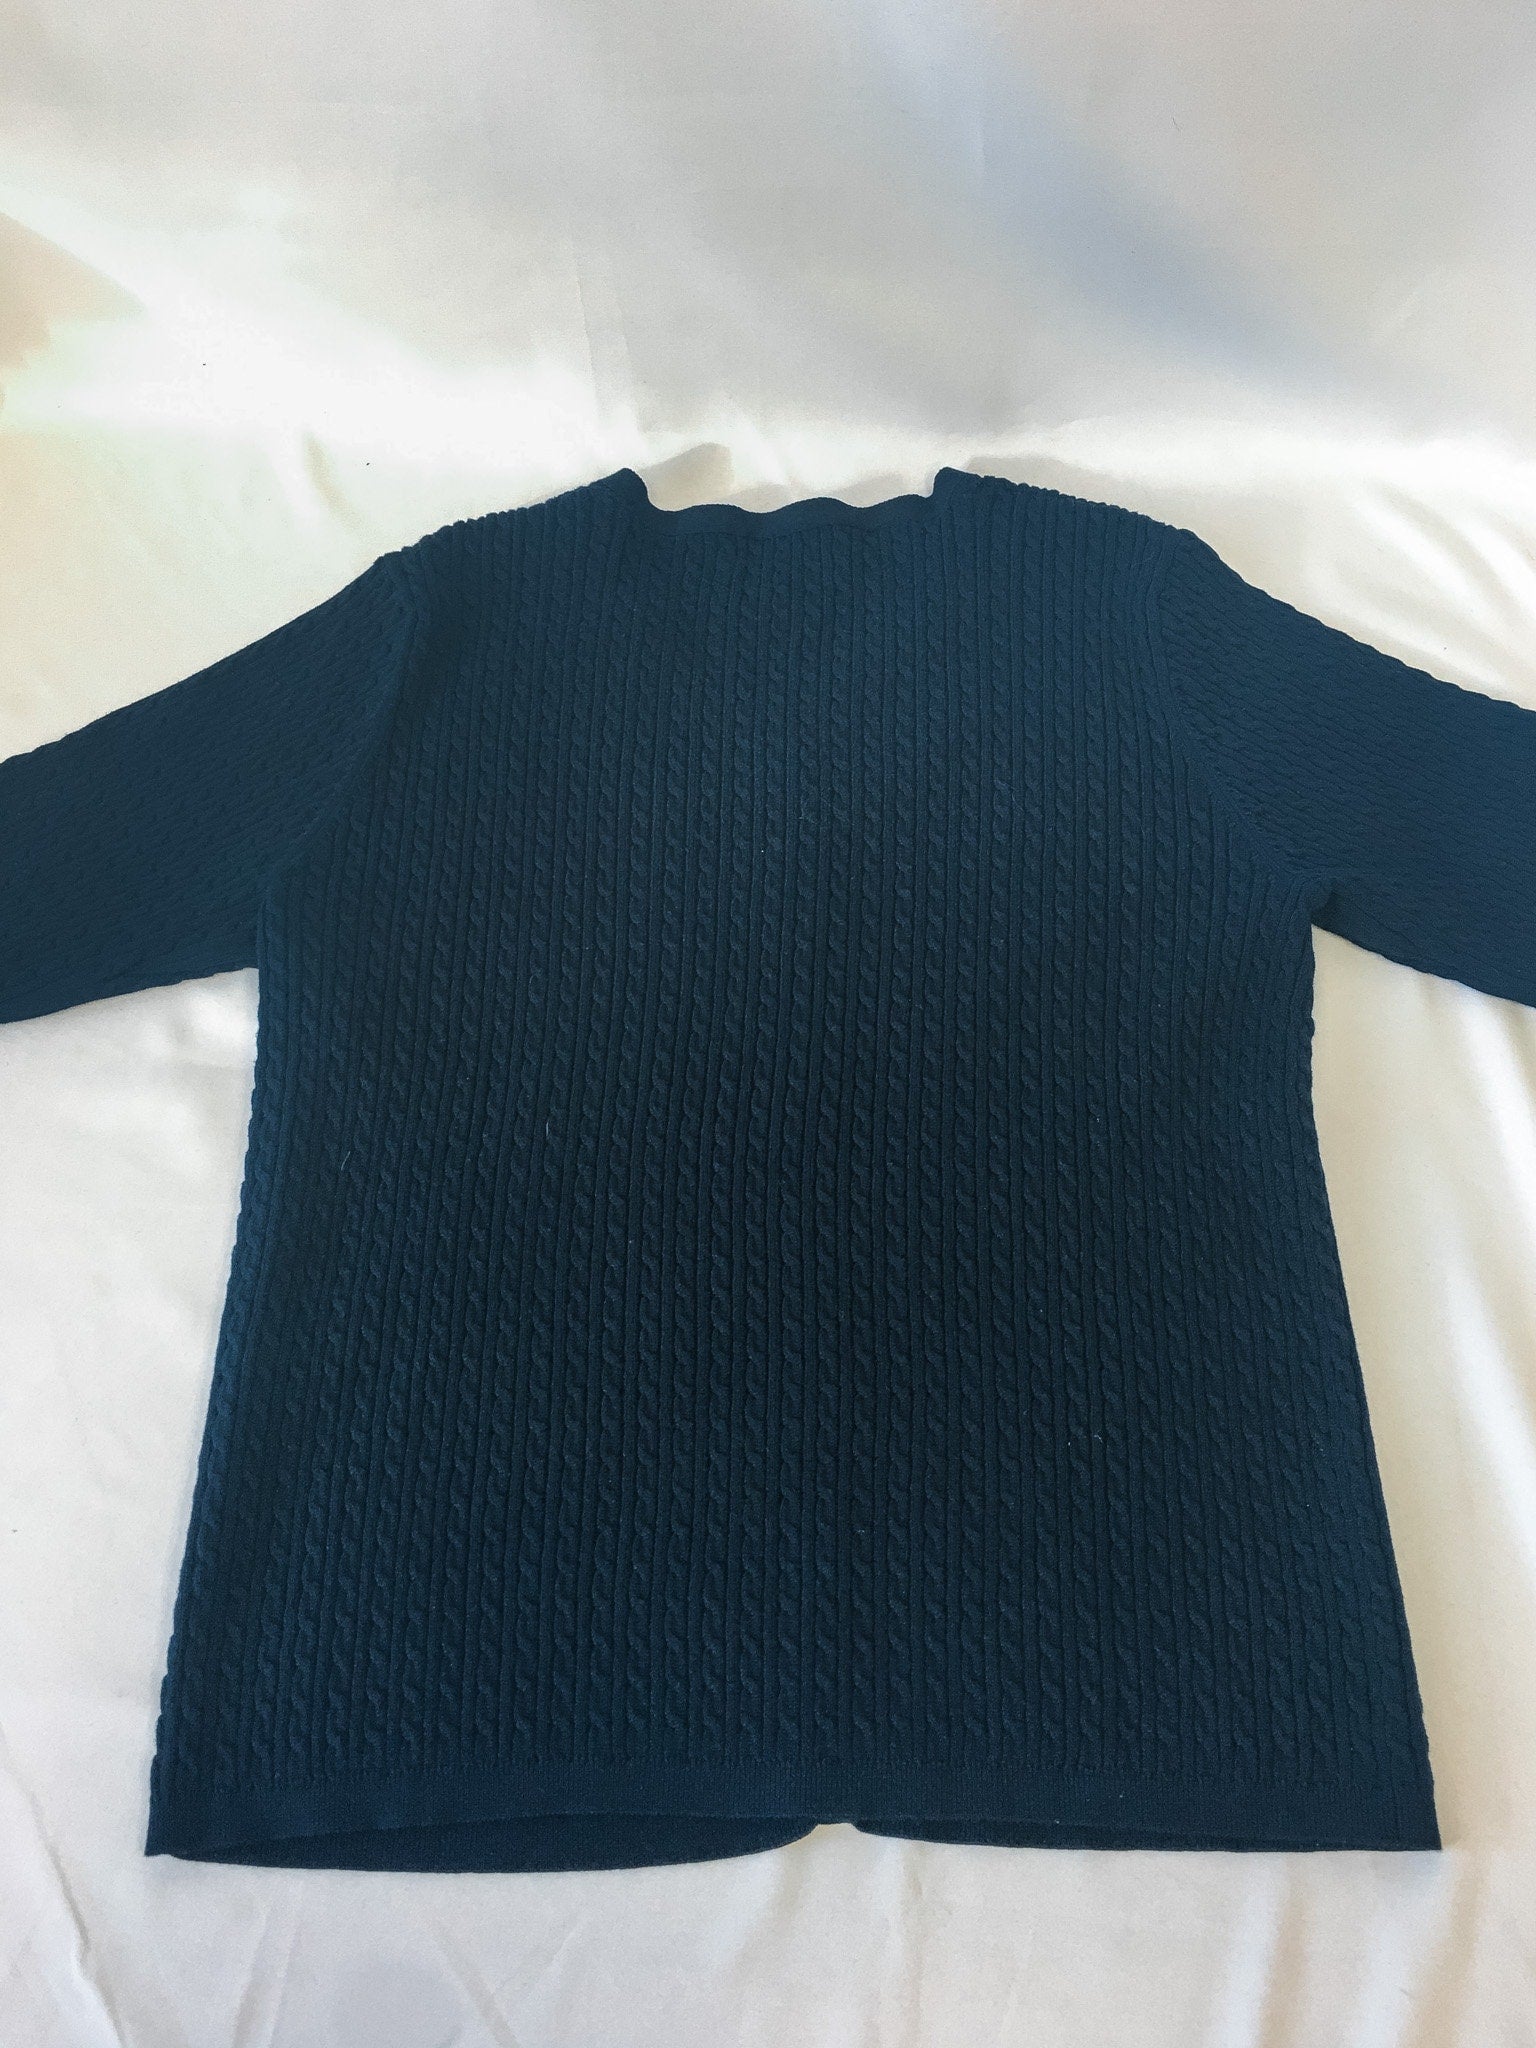 Vintage 90s Pendleton Navy Blue Button Down Cable Knit Cardigan, Sz. M, 1990s Pendleton Cardigan Sweater